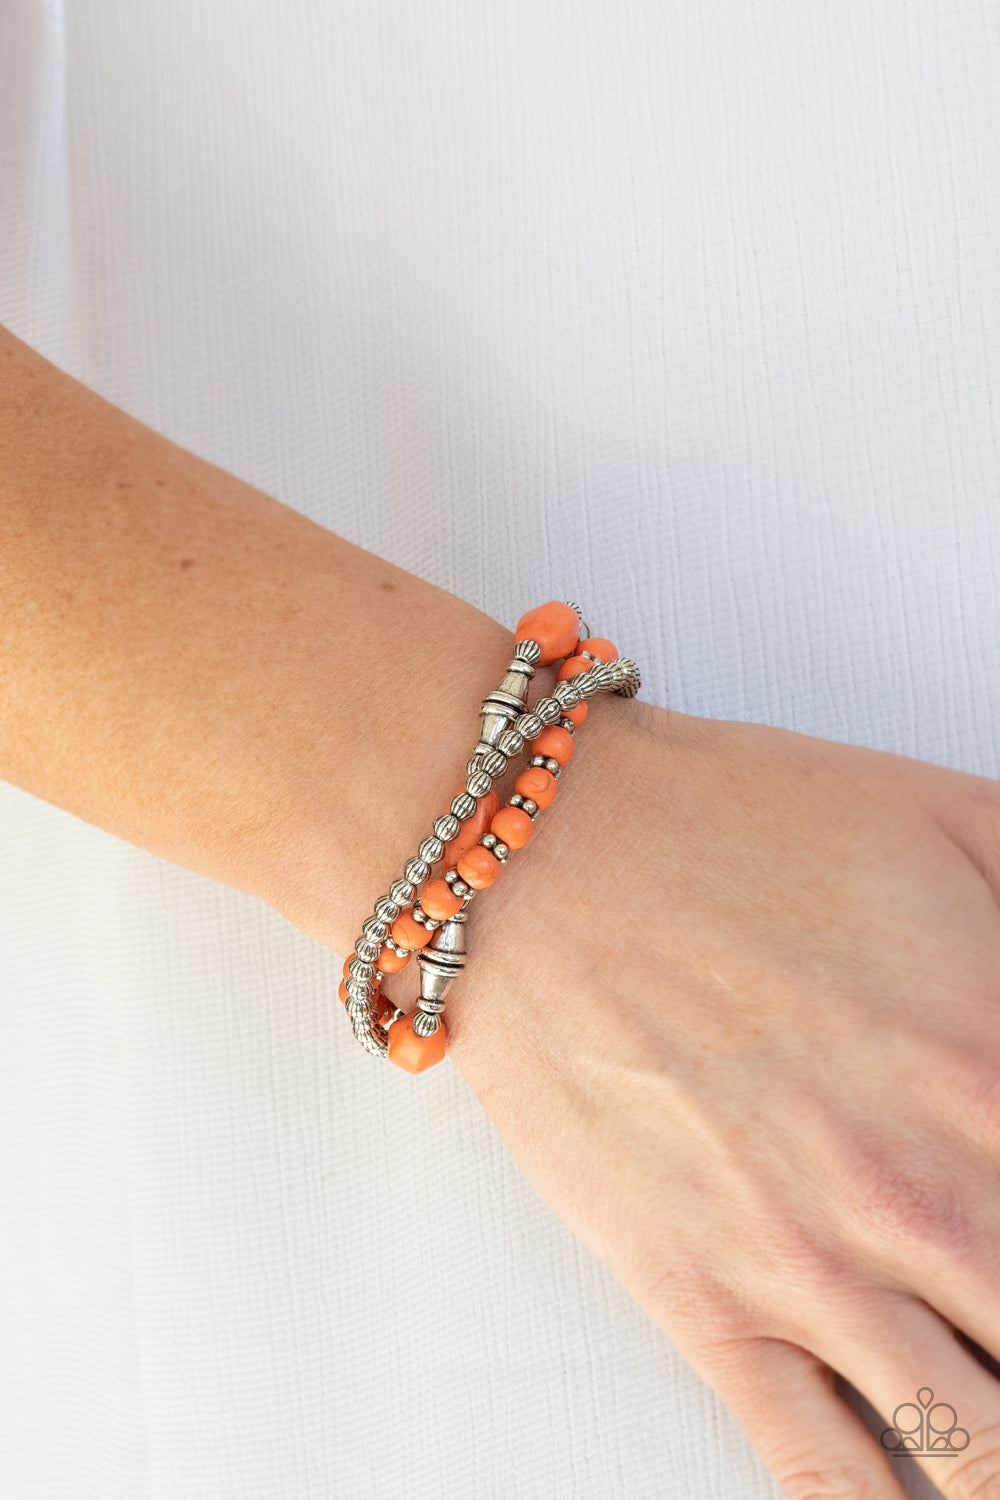 Sahara Sanctuary- Orange and Silver Bracelet- Paparazzi Accessories